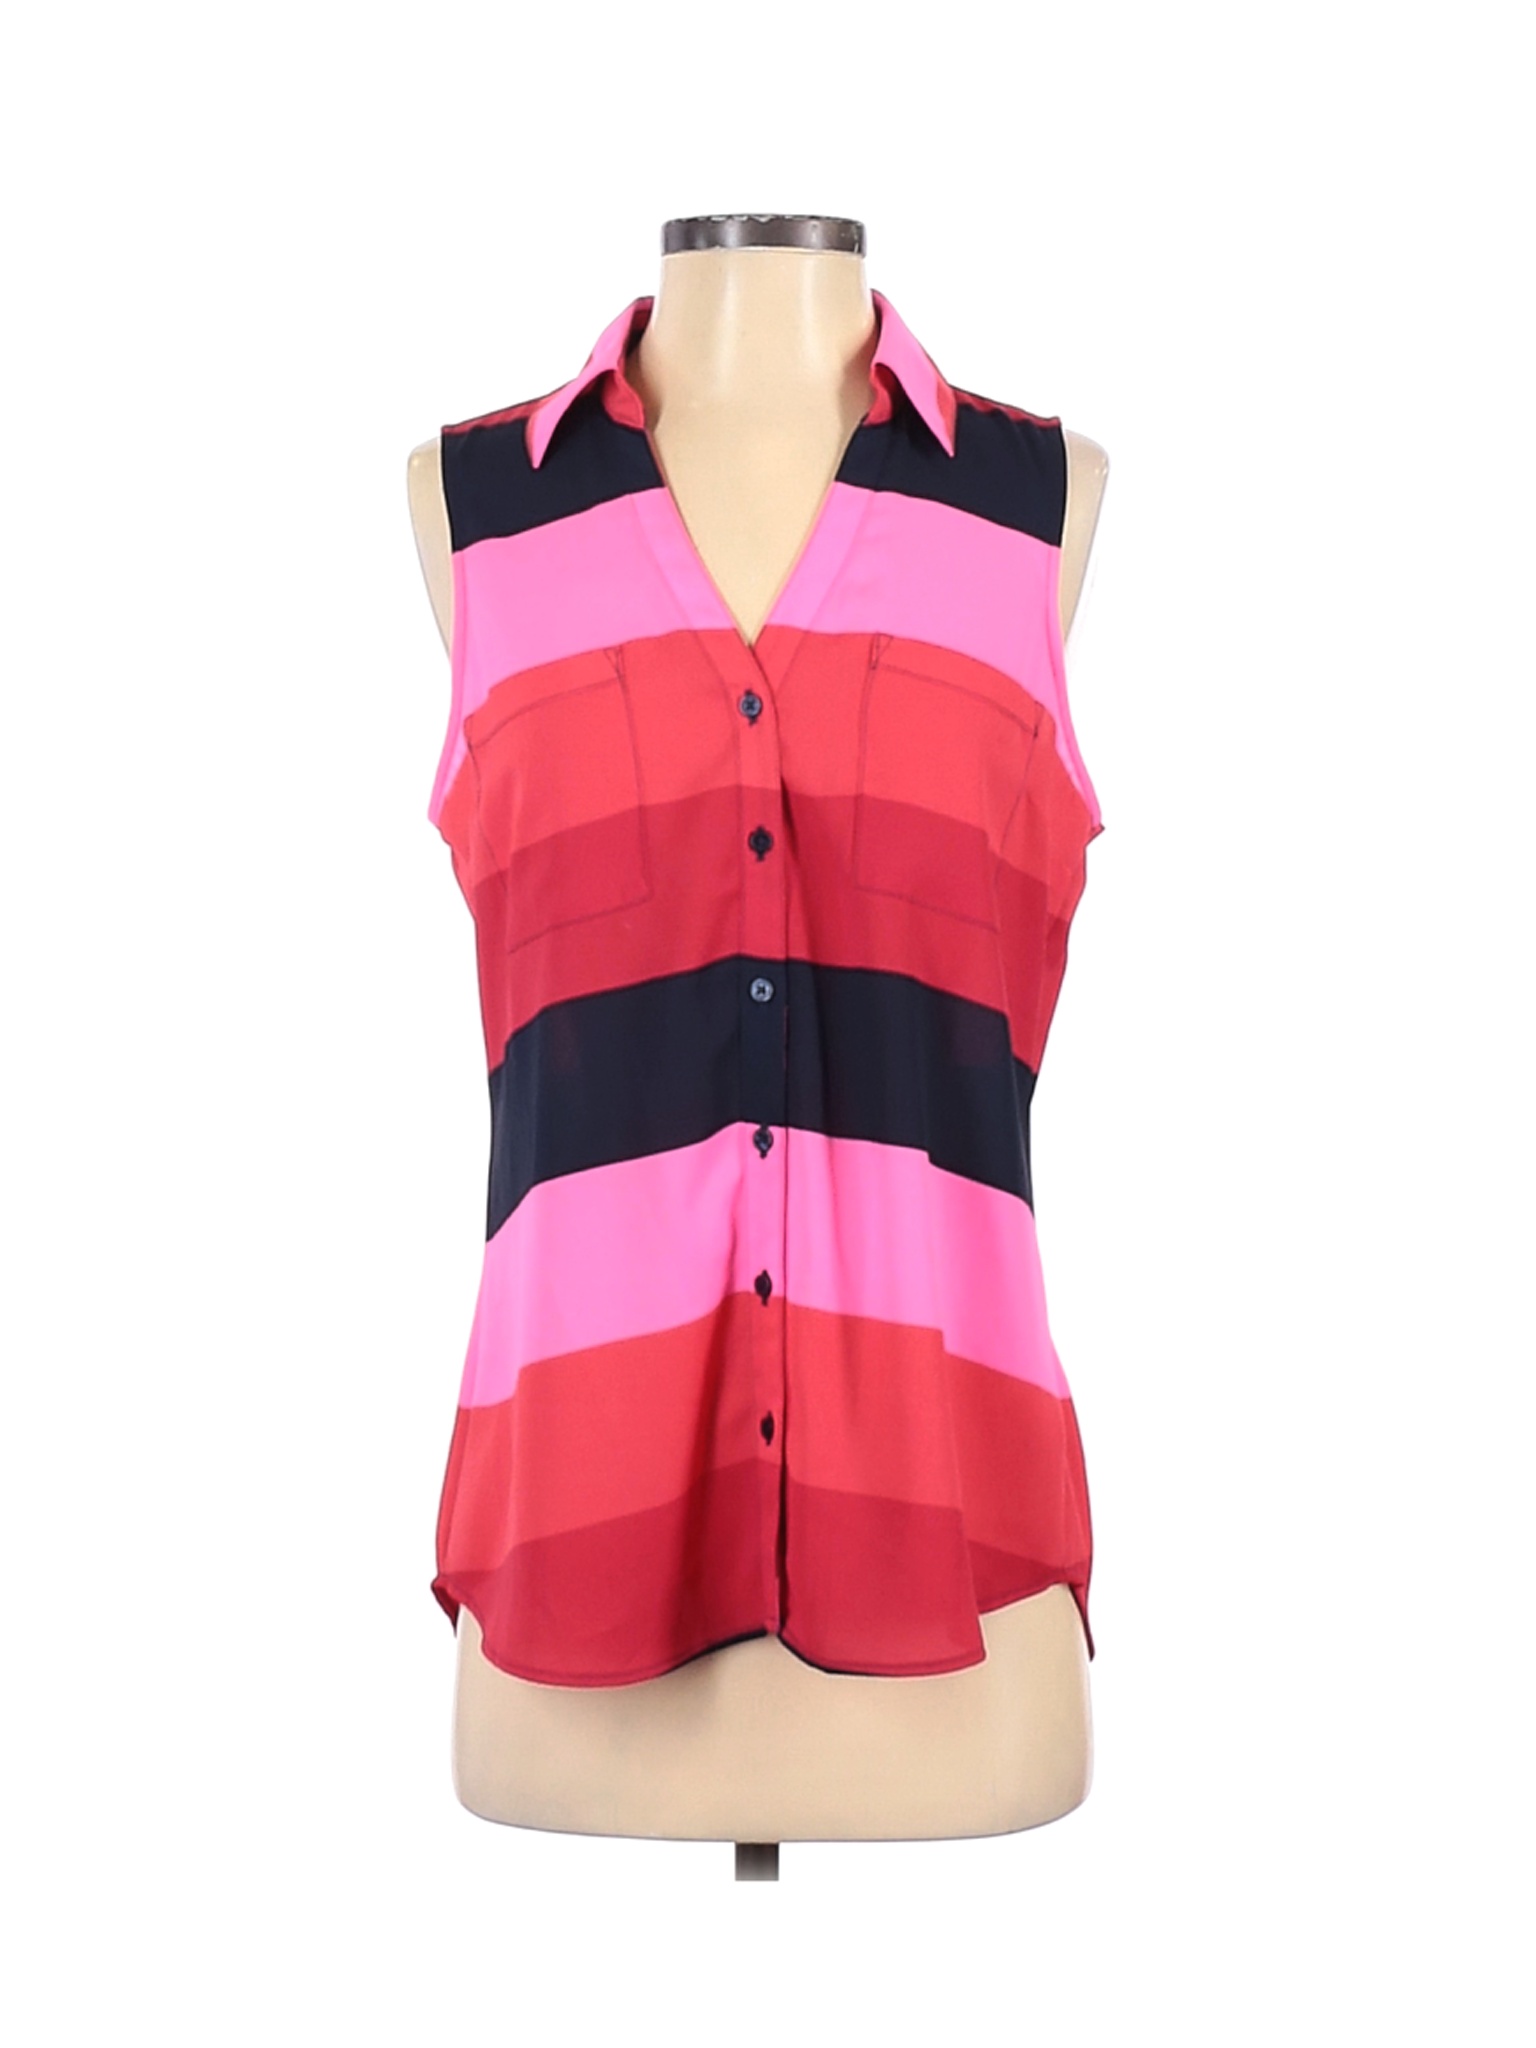 Express Women Pink Sleeveless Blouse S | eBay